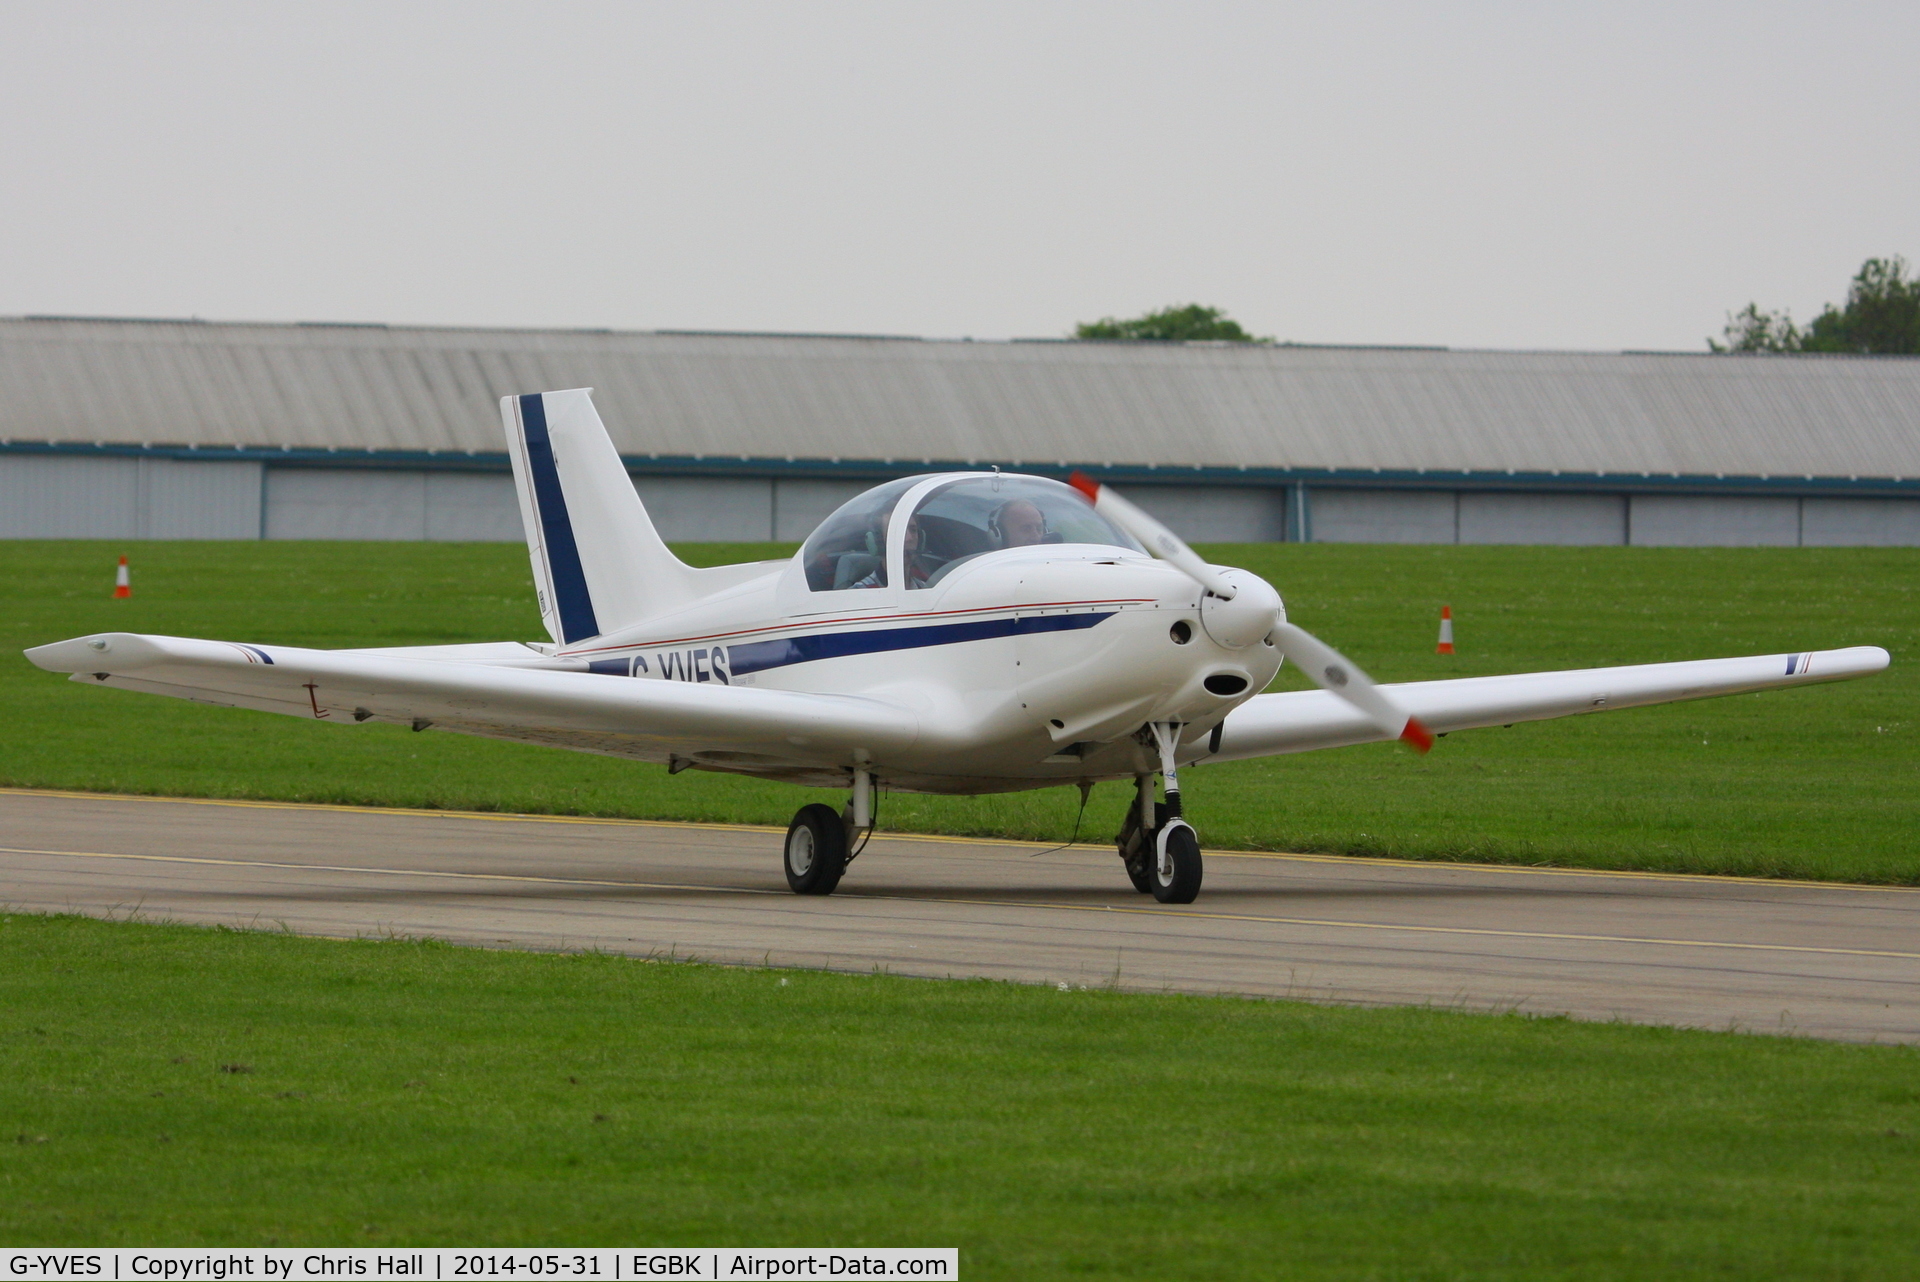 G-YVES, 2005 Alpi Aviation Pioneer 300 C/N PFA 330-14290, at AeroExpo 2014